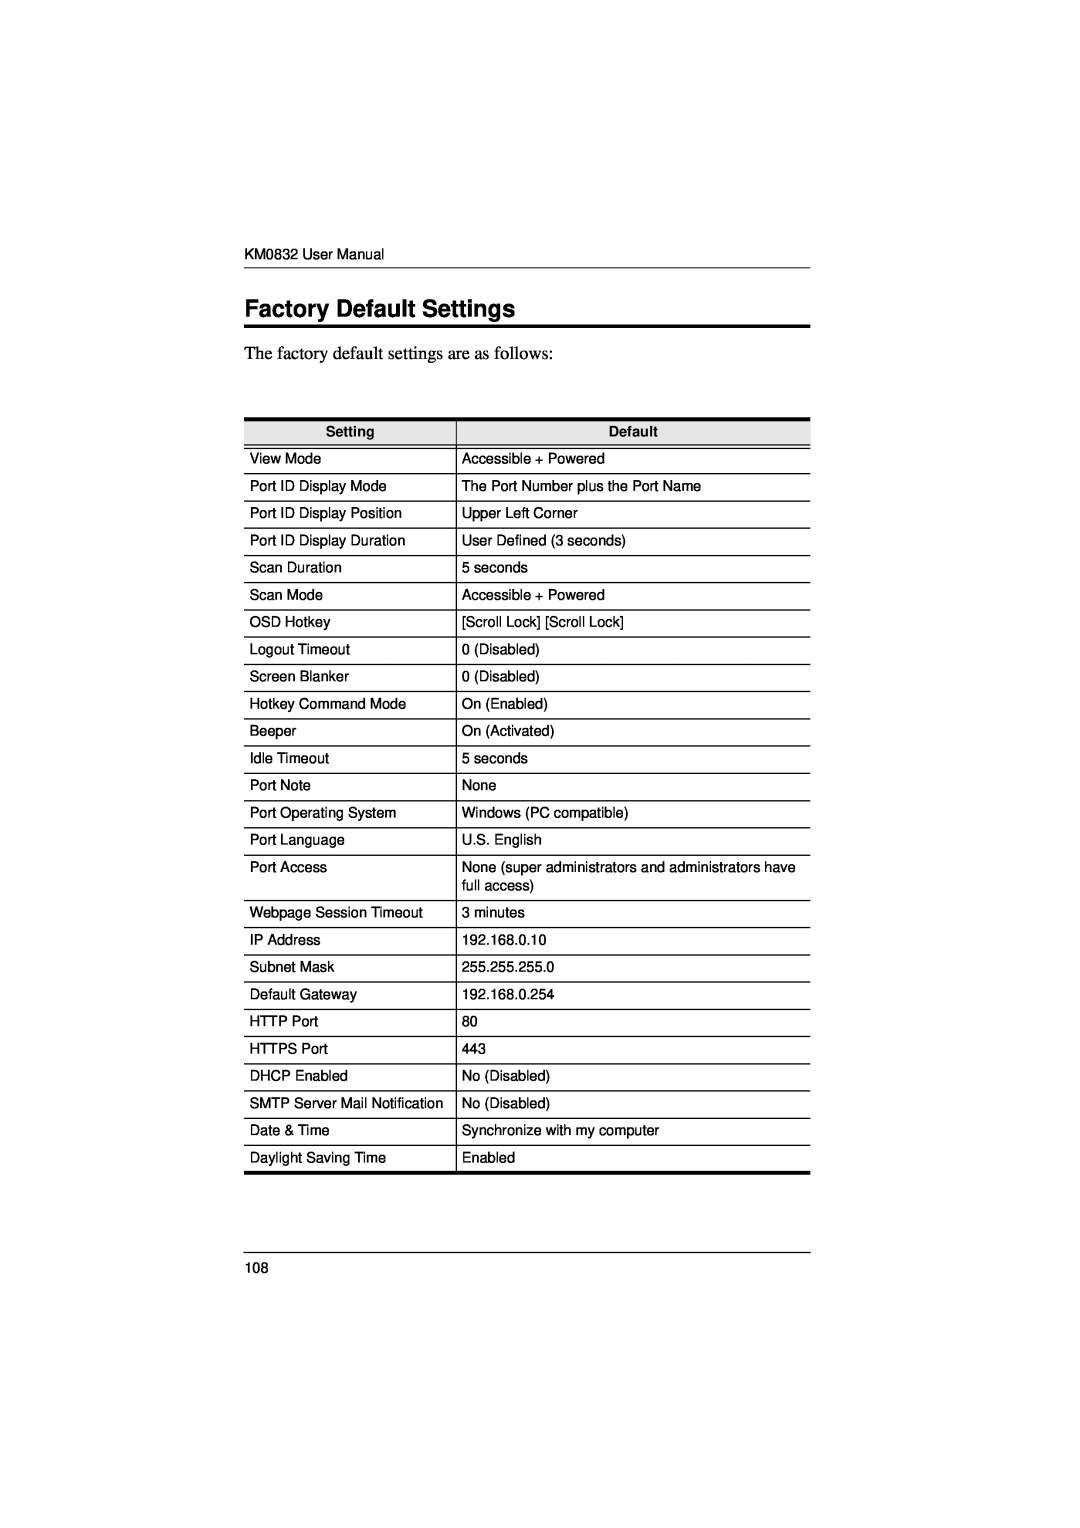 ATEN Technology KM0832 user manual Factory Default Settings, The factory default settings are as follows 